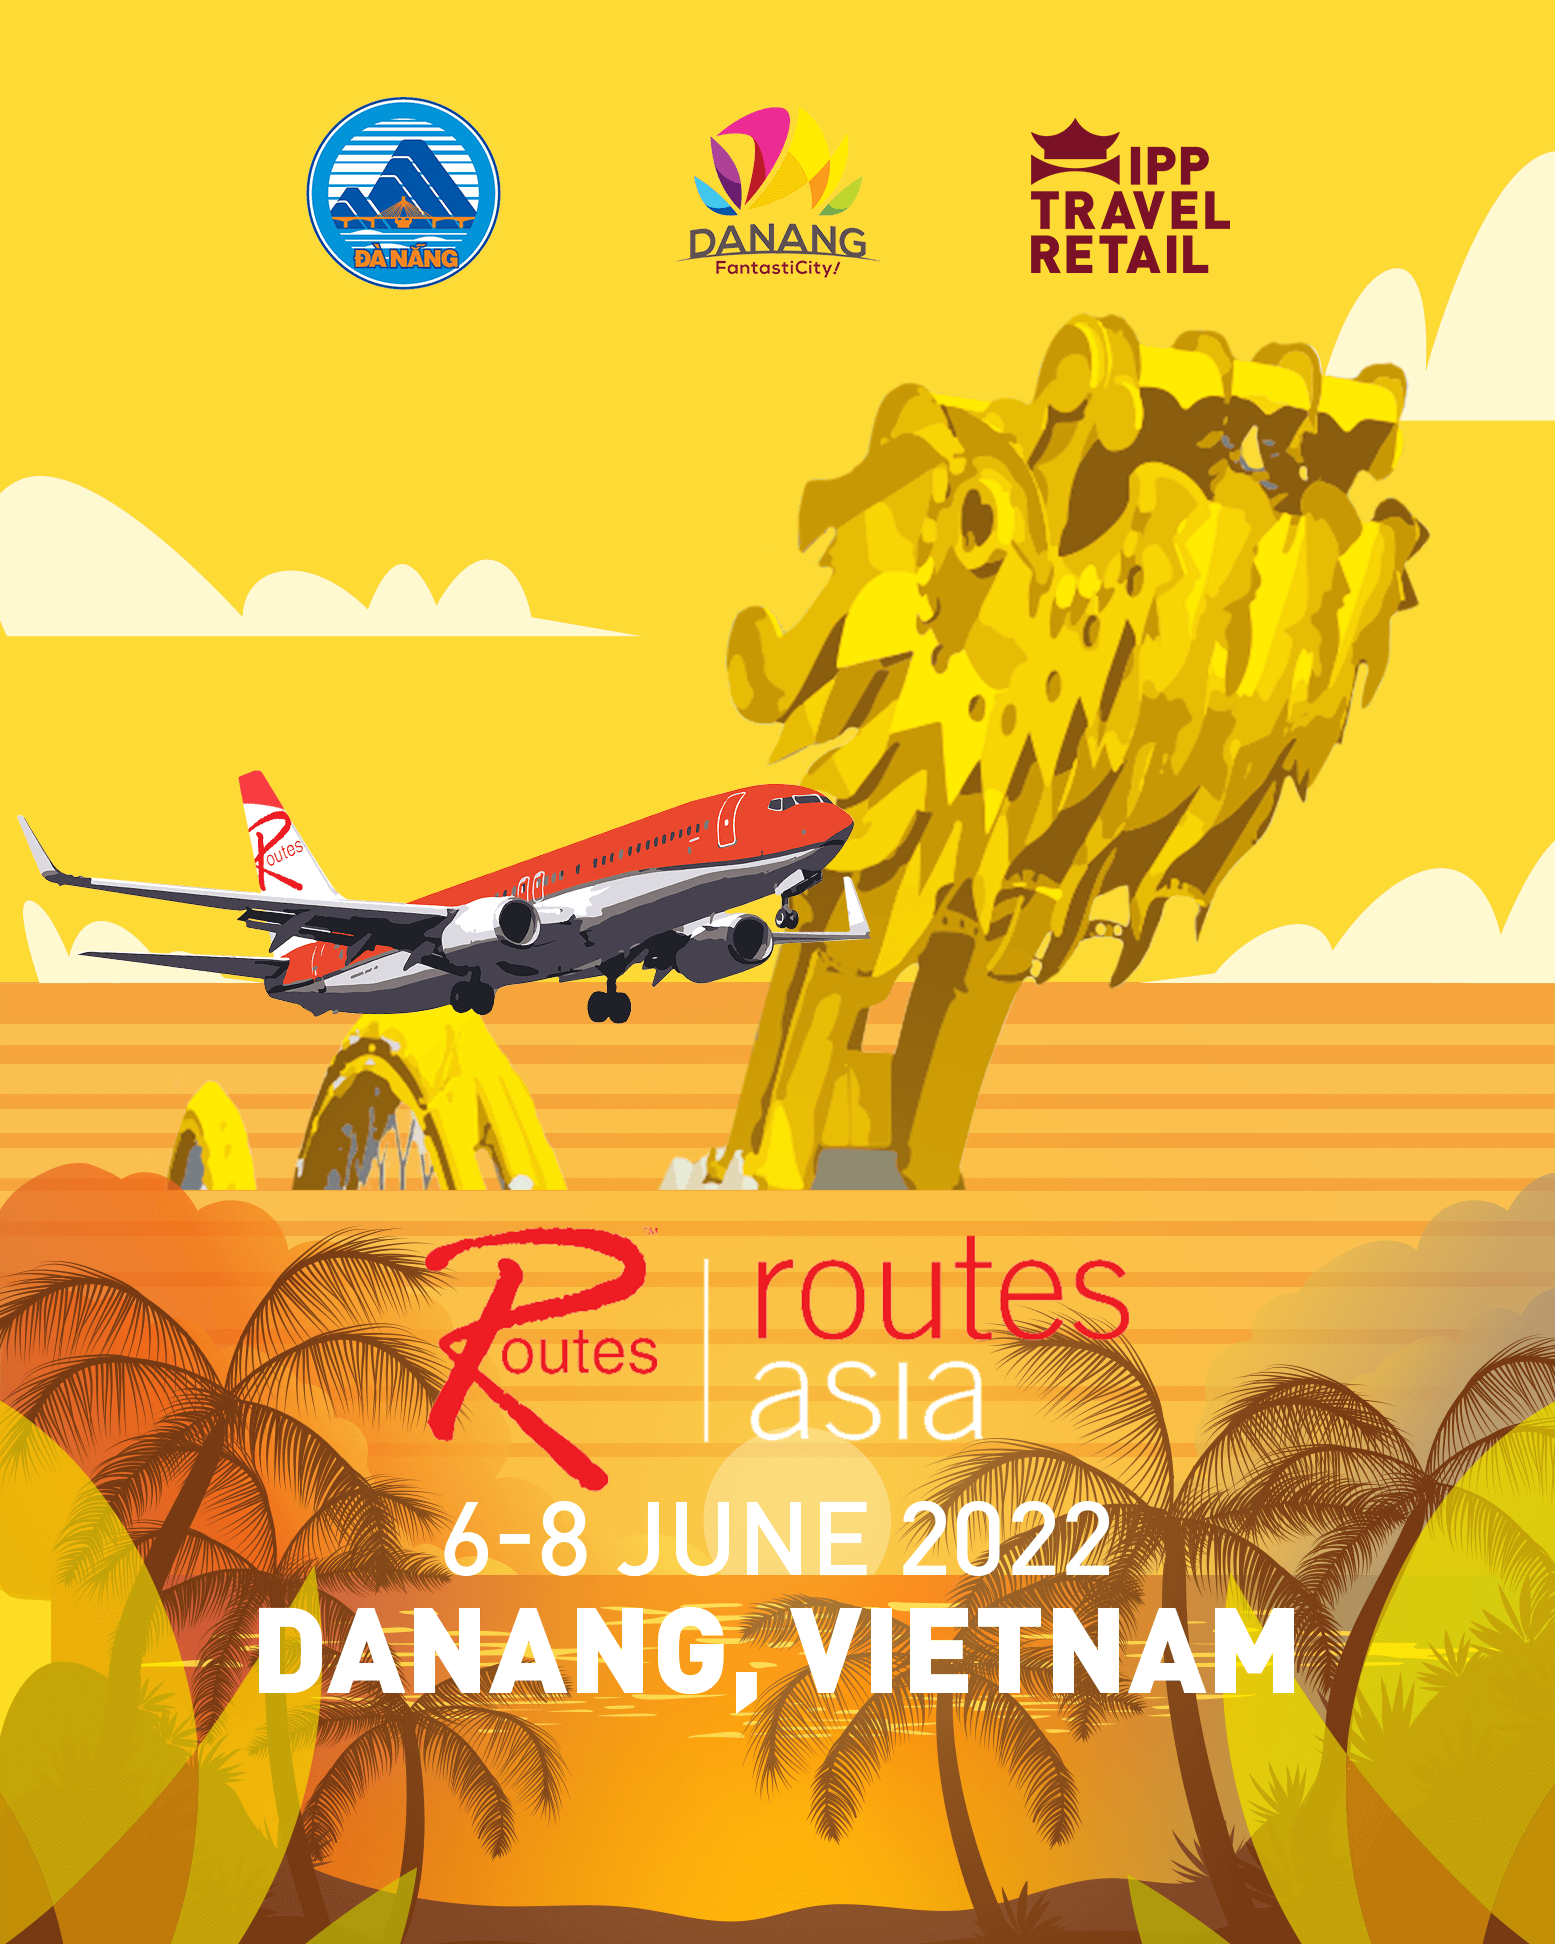 routes-asia-2022-danang-vietnam.html